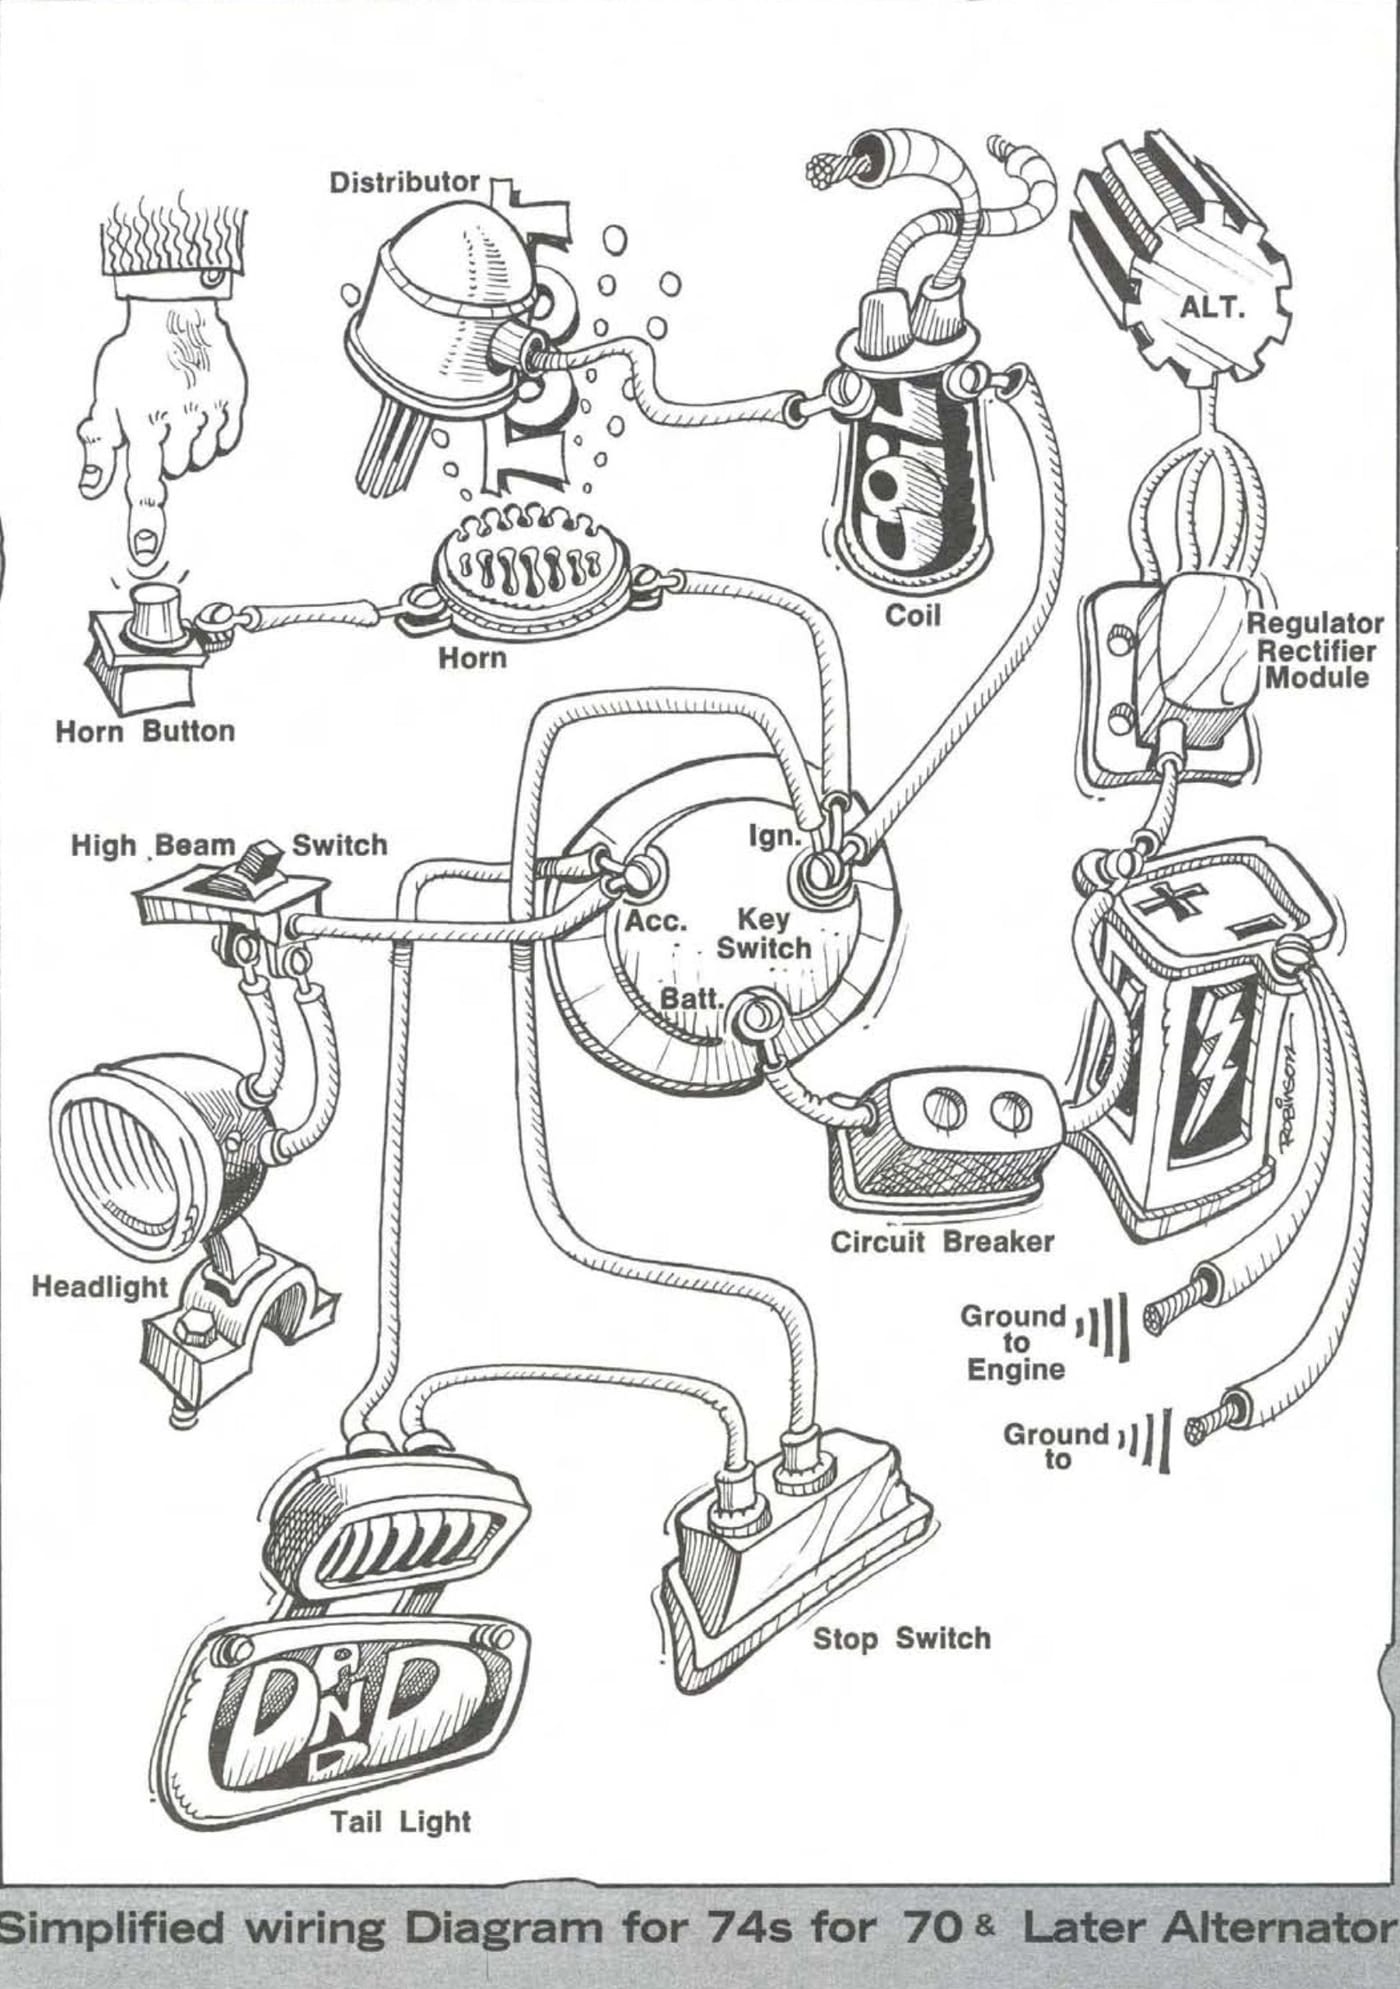 Reliability of a 1970 Shovelhead? - Page 4 - Harley Davidson Forums